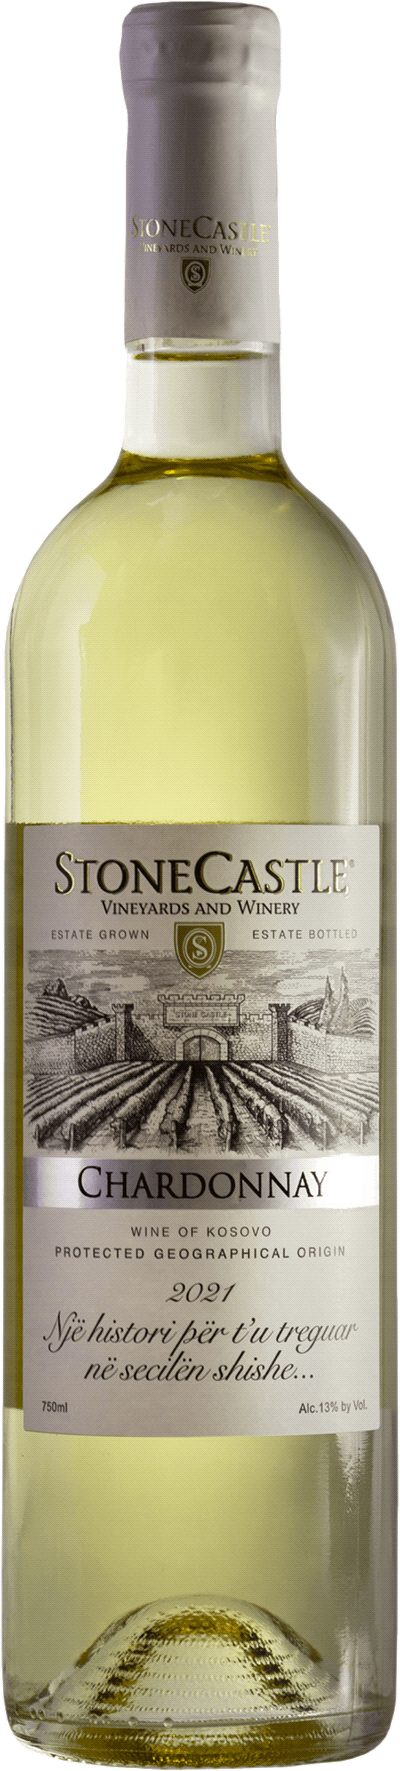 StoneCastle Chardonnay